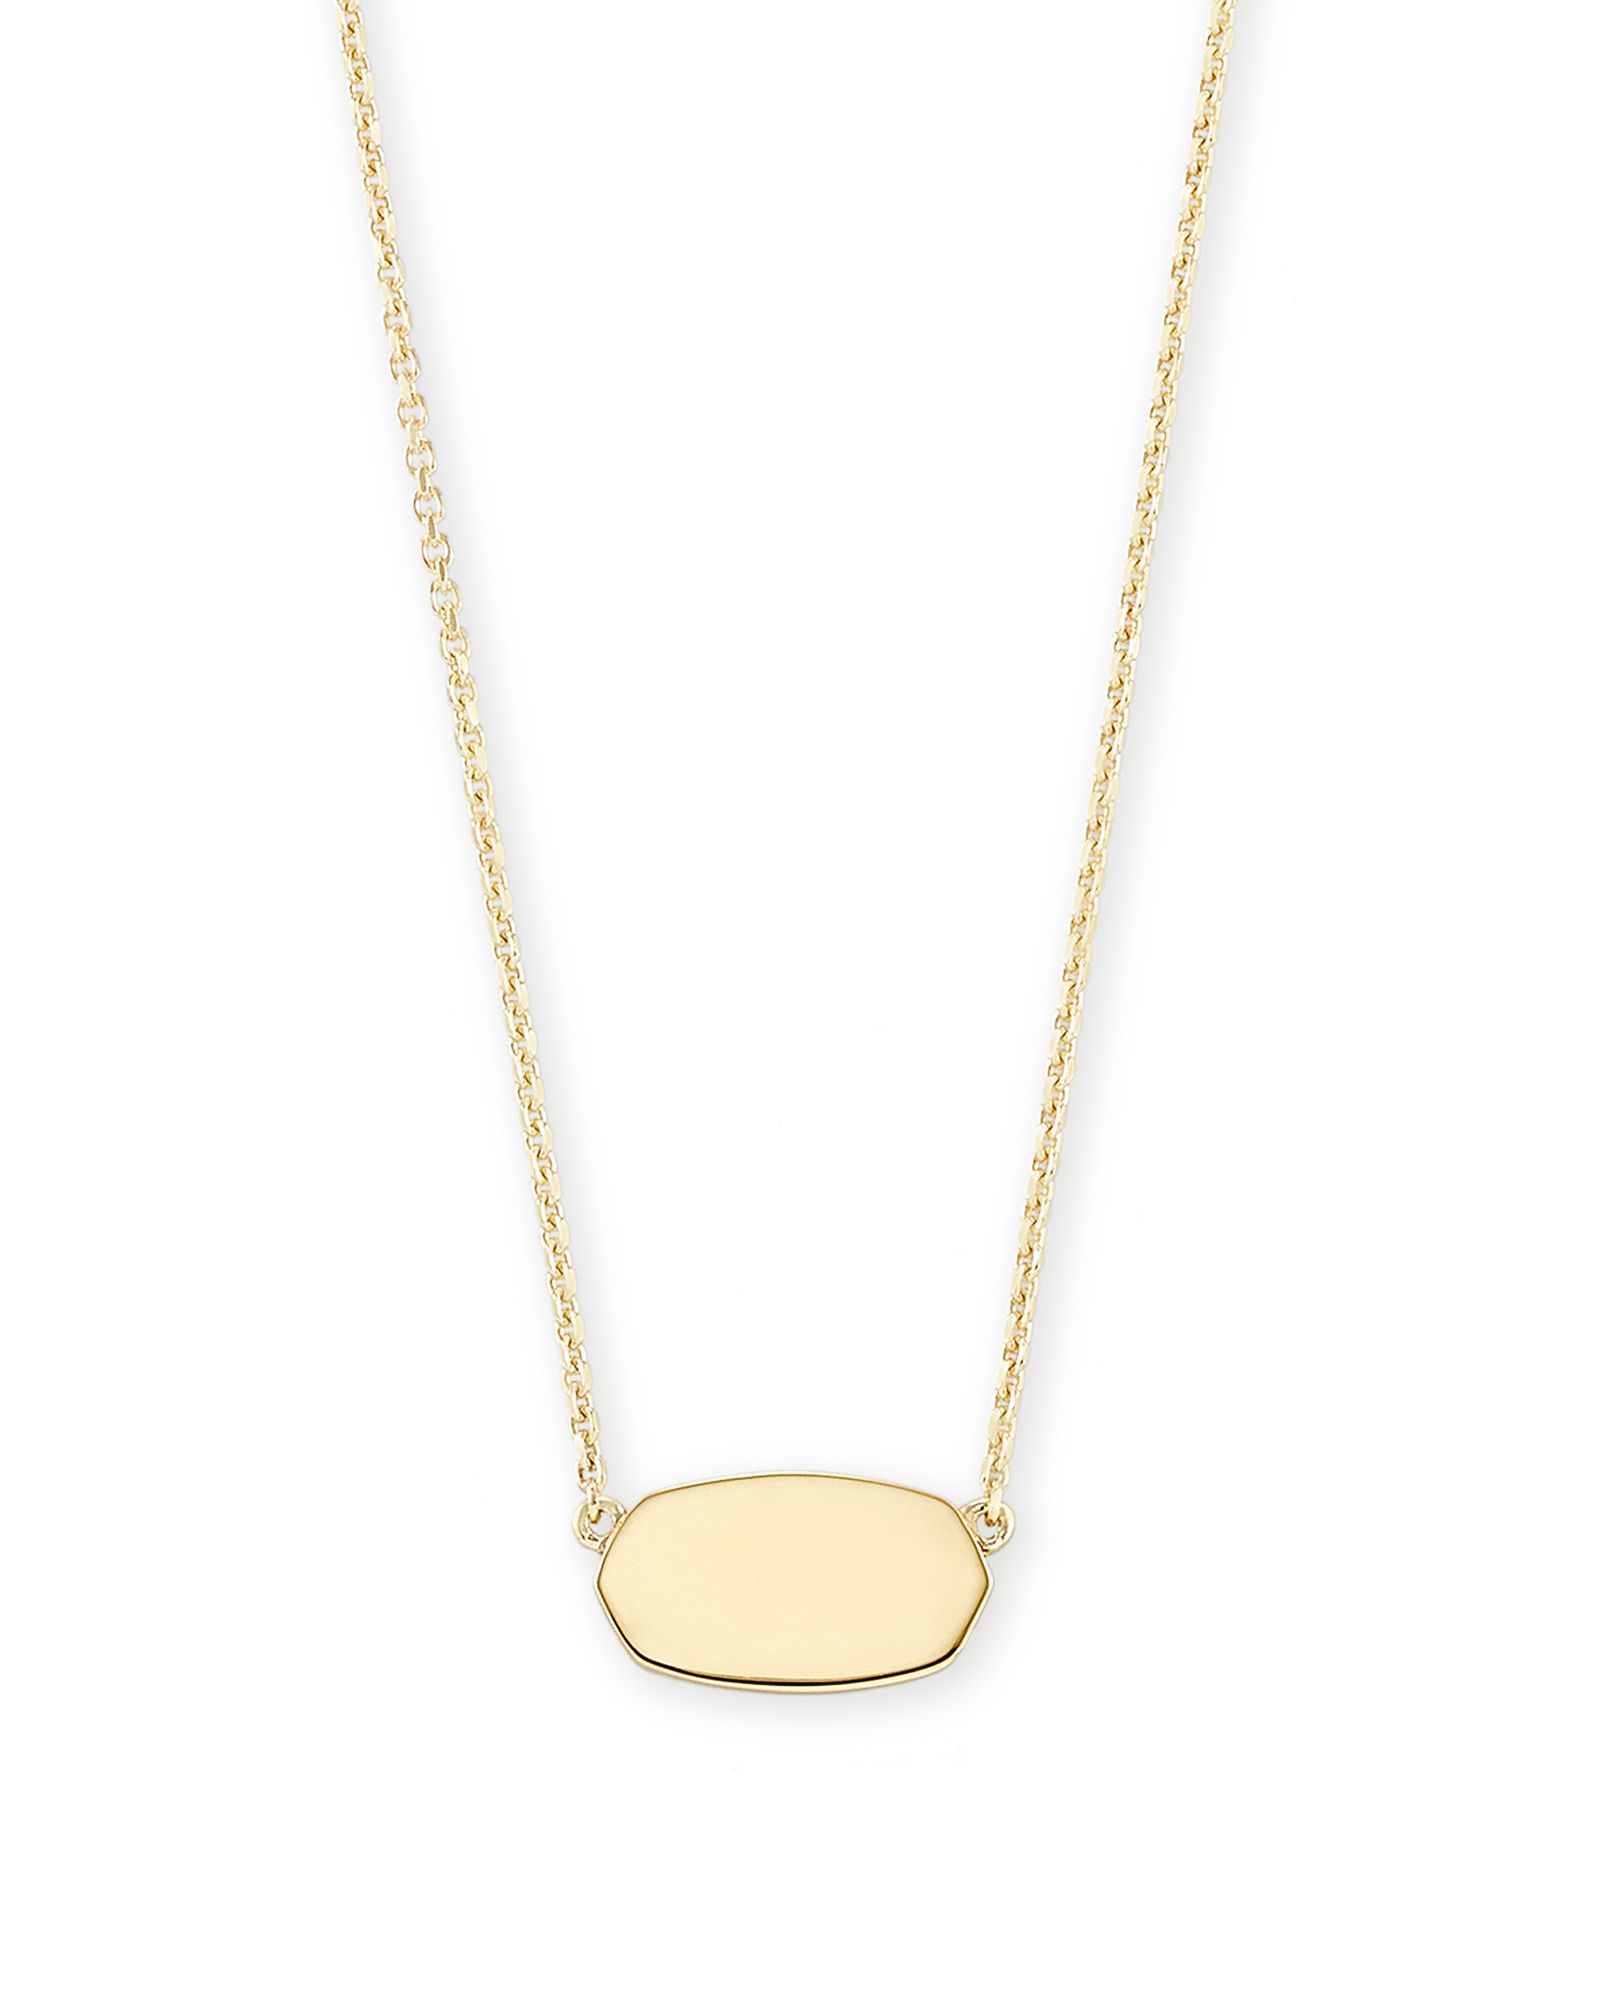 Elisa Pendant Necklace in 18k Gold Vermeil | Kendra Scott | Kendra Scott